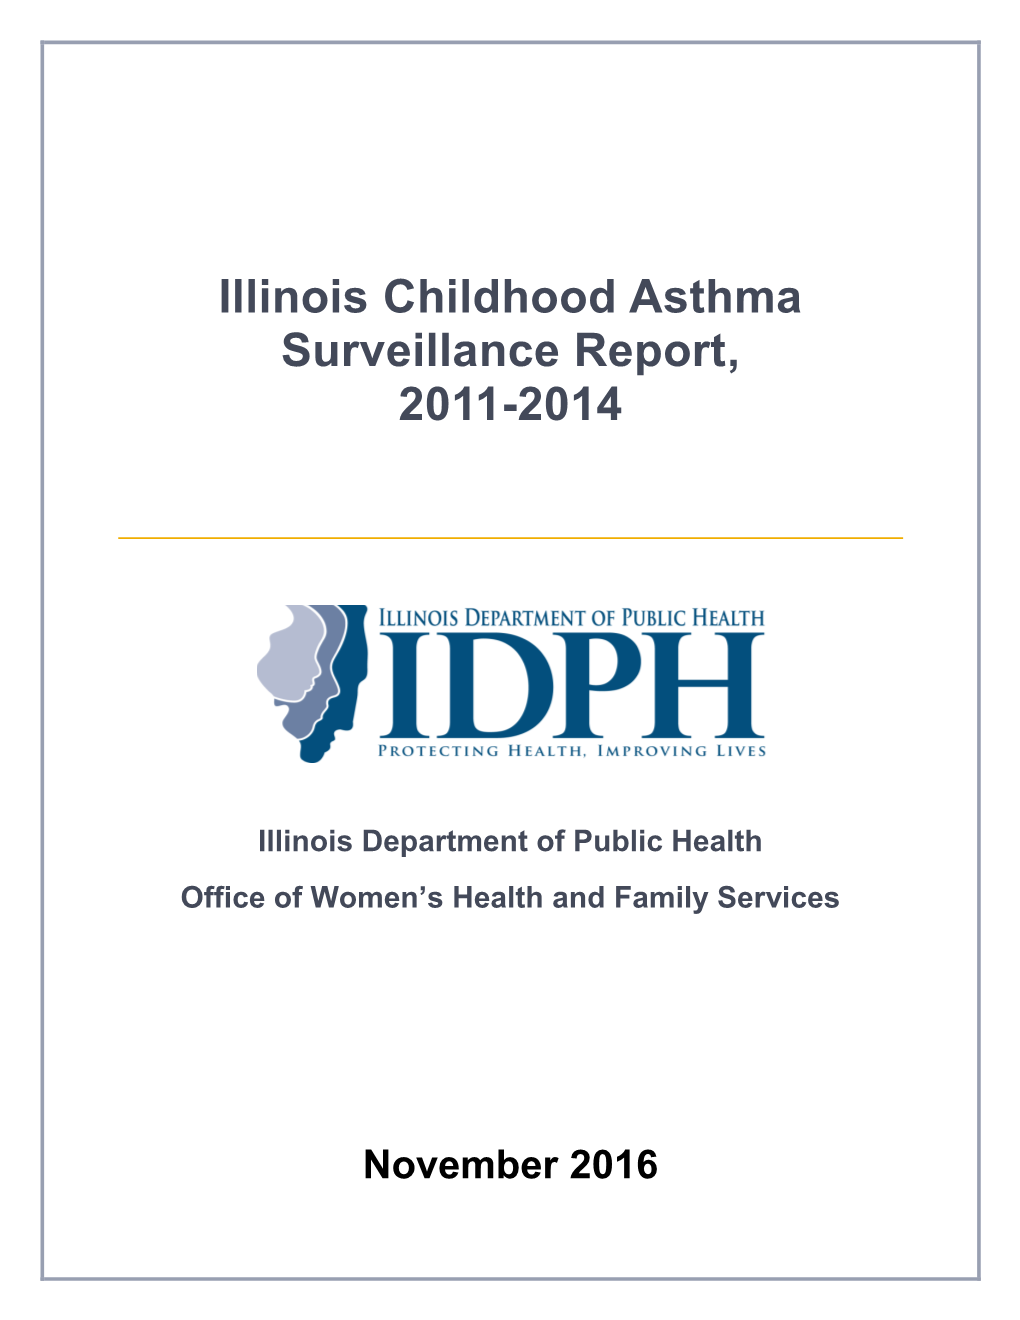 Illinois Childhood Asthma Surveillance Report, 2011-2014